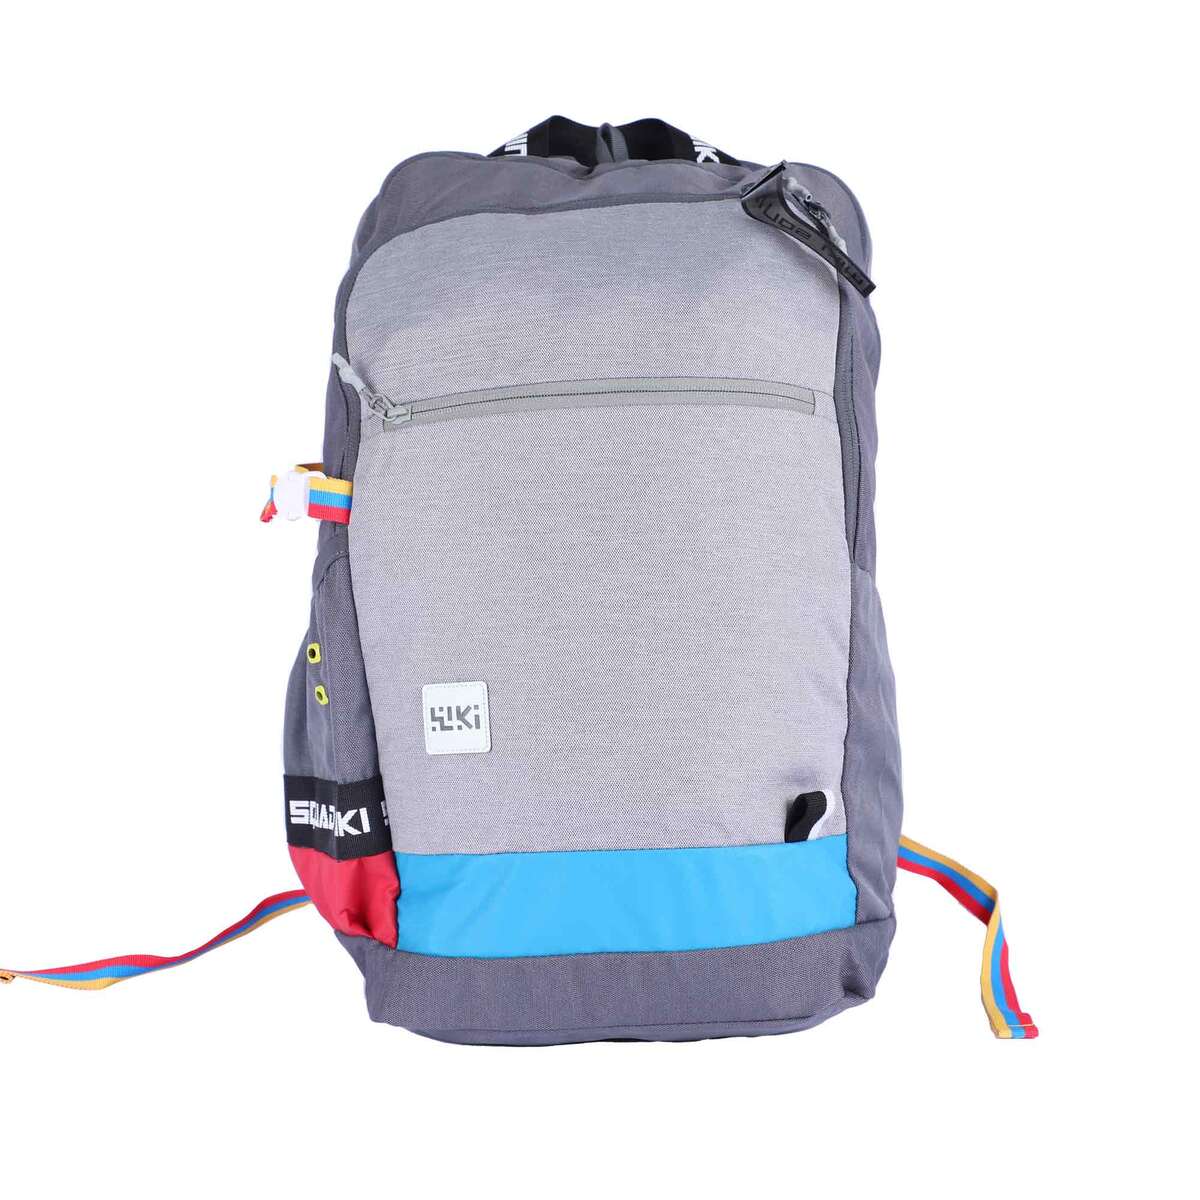 Wildcraft School Backpack Sqd1Cnv 18.5inch, Grey